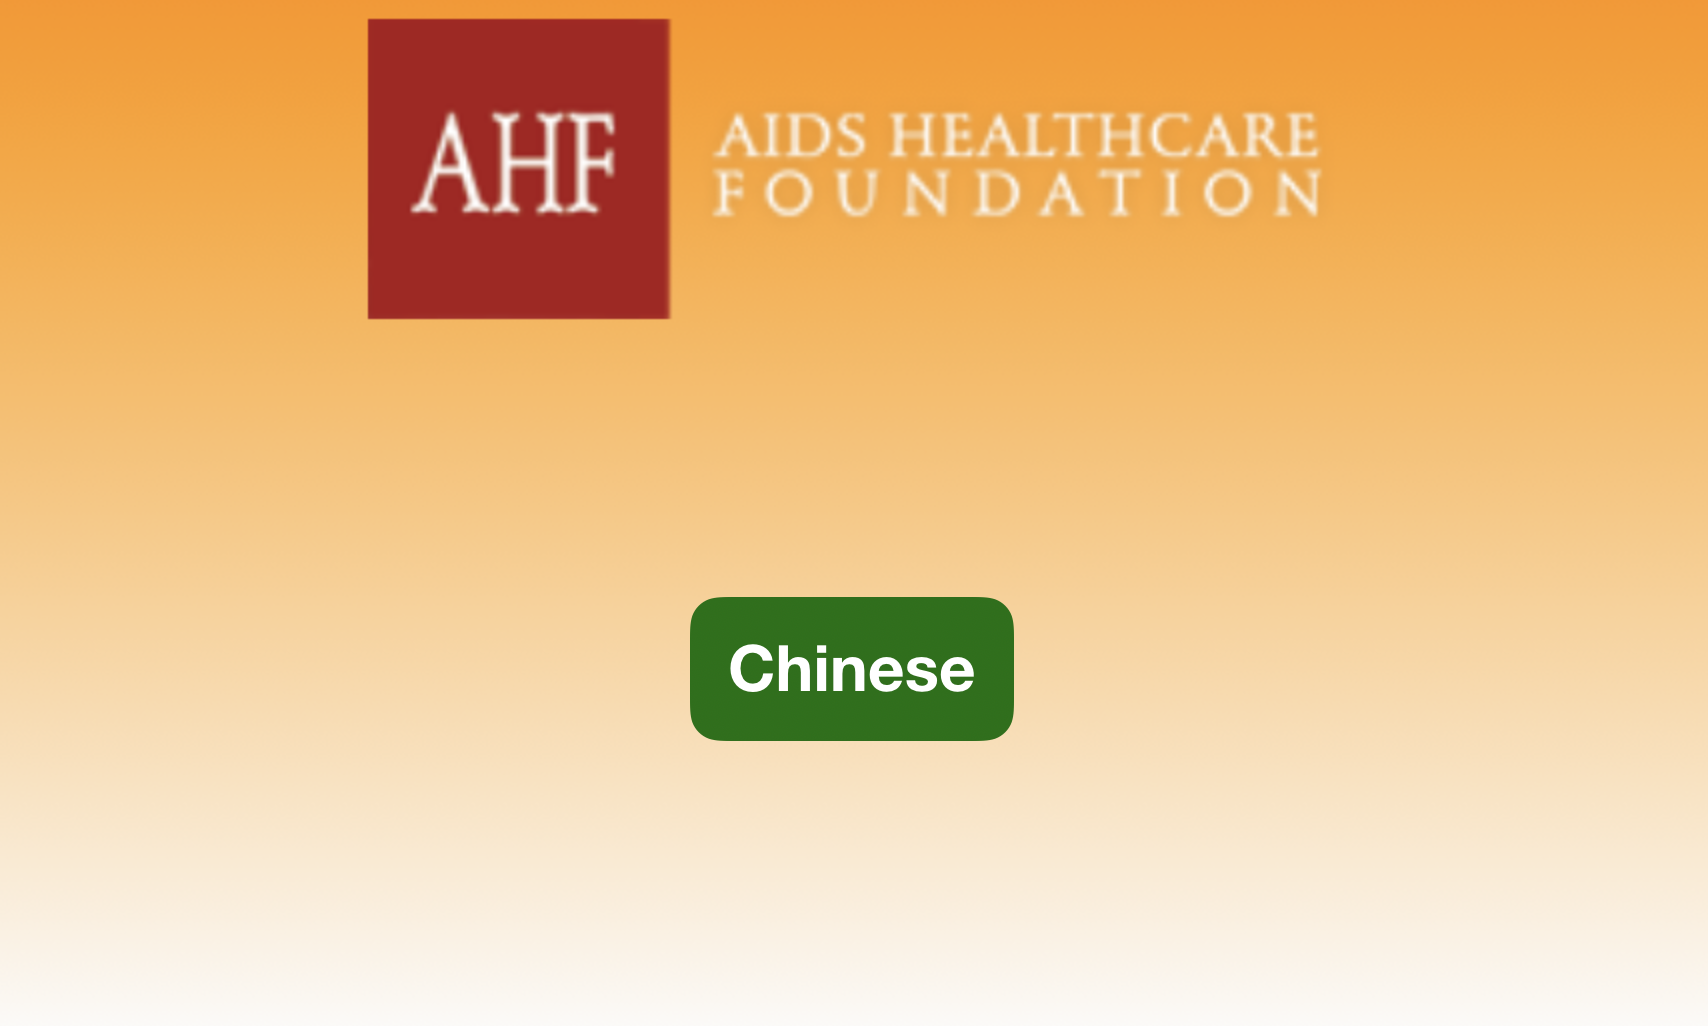 Women's health and HiV pediatrics 2022 HIVPED102-Chinese